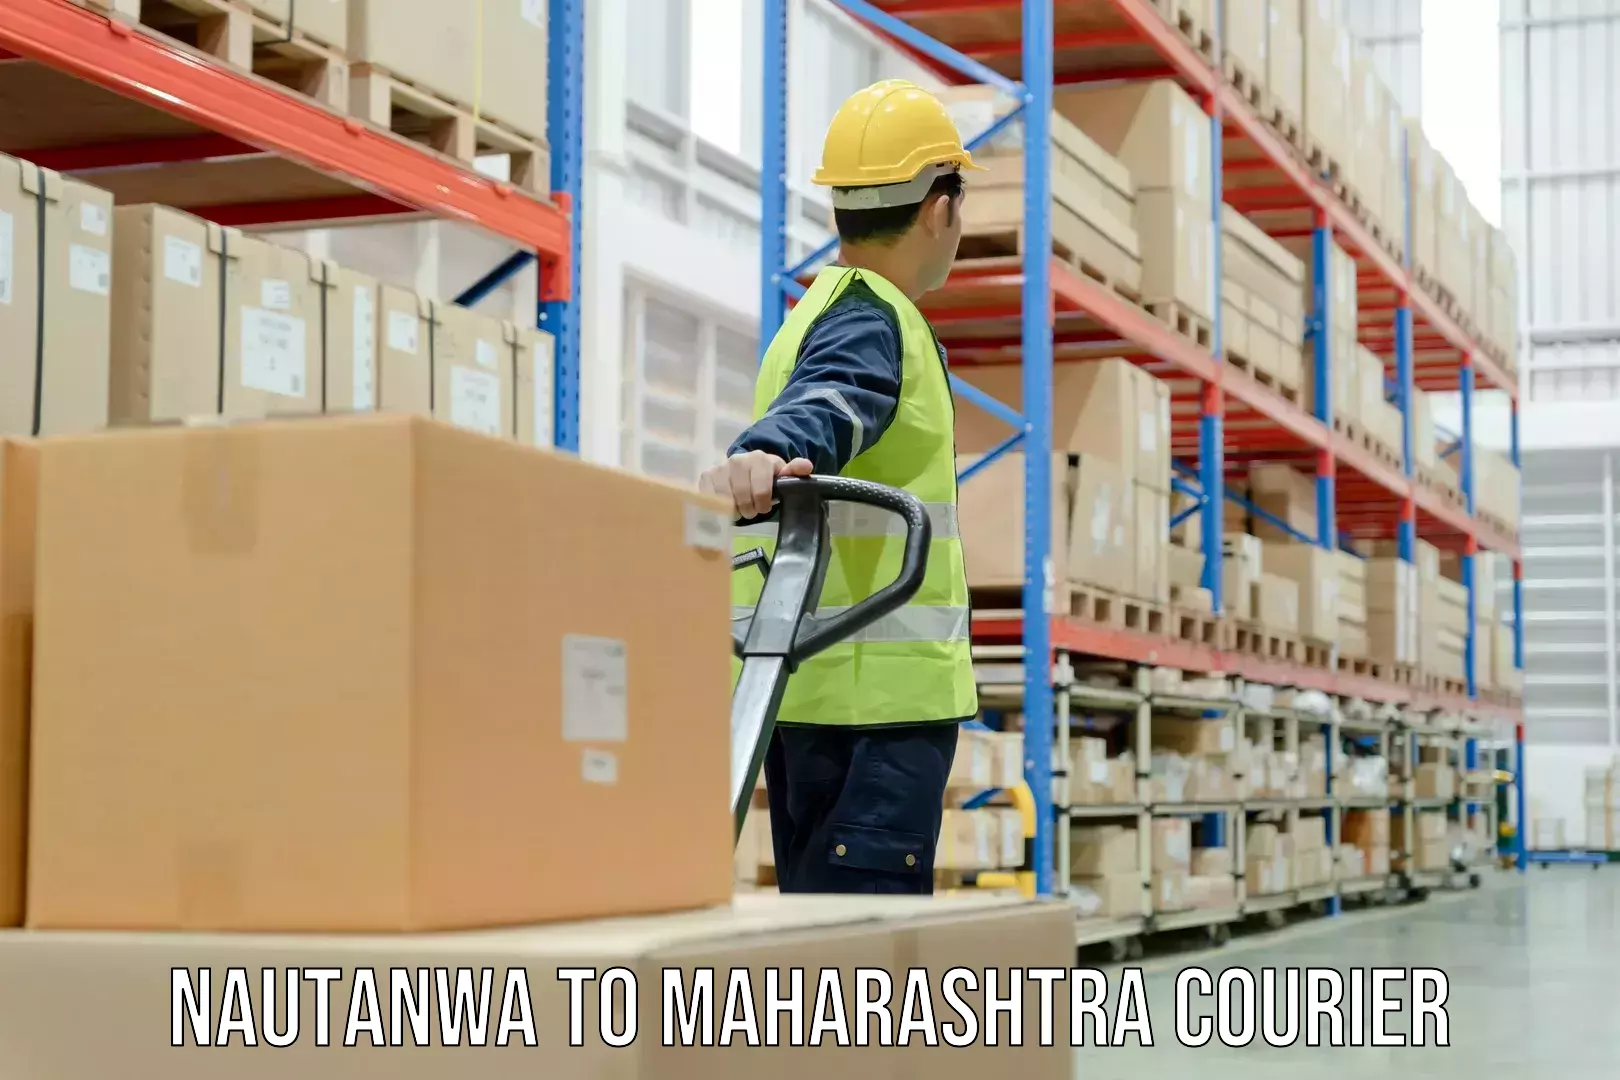 International courier networks Nautanwa to Maharashtra